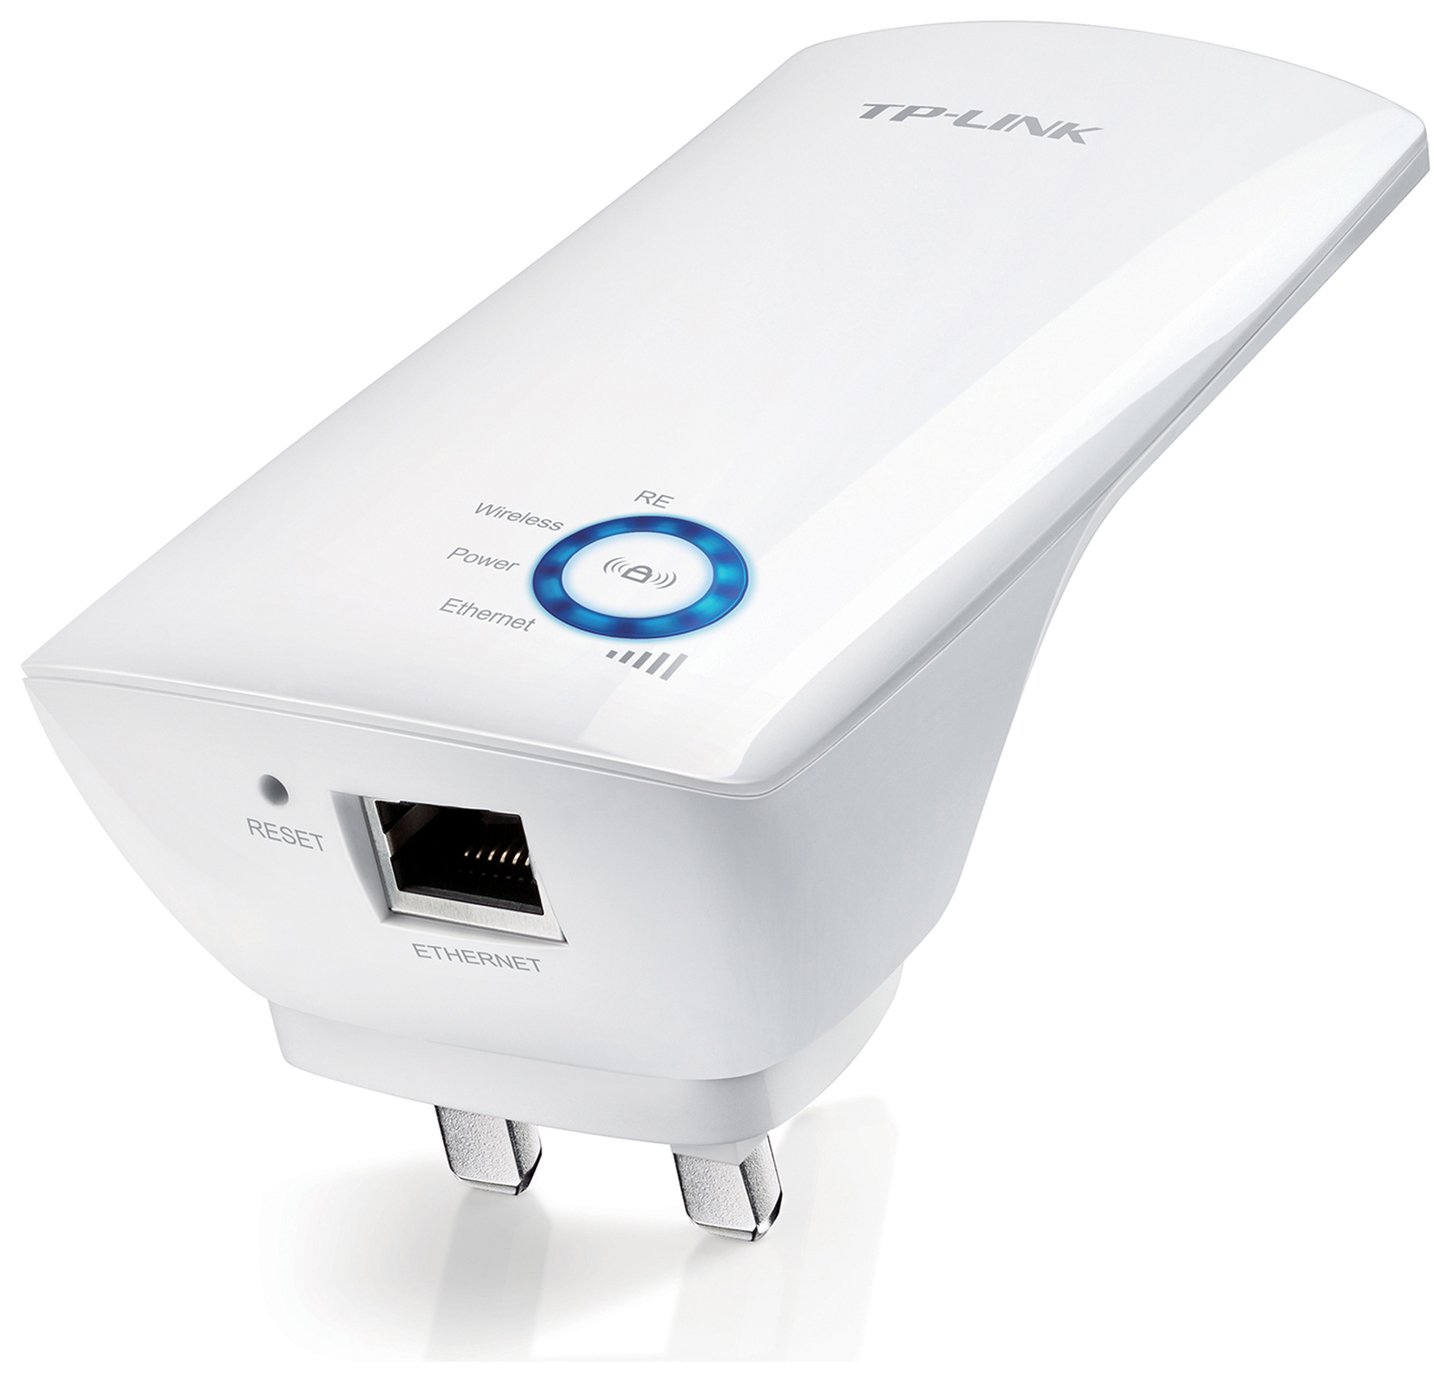 TP-Link 300Mbps Wi-Fi Range Extender & Booster Review